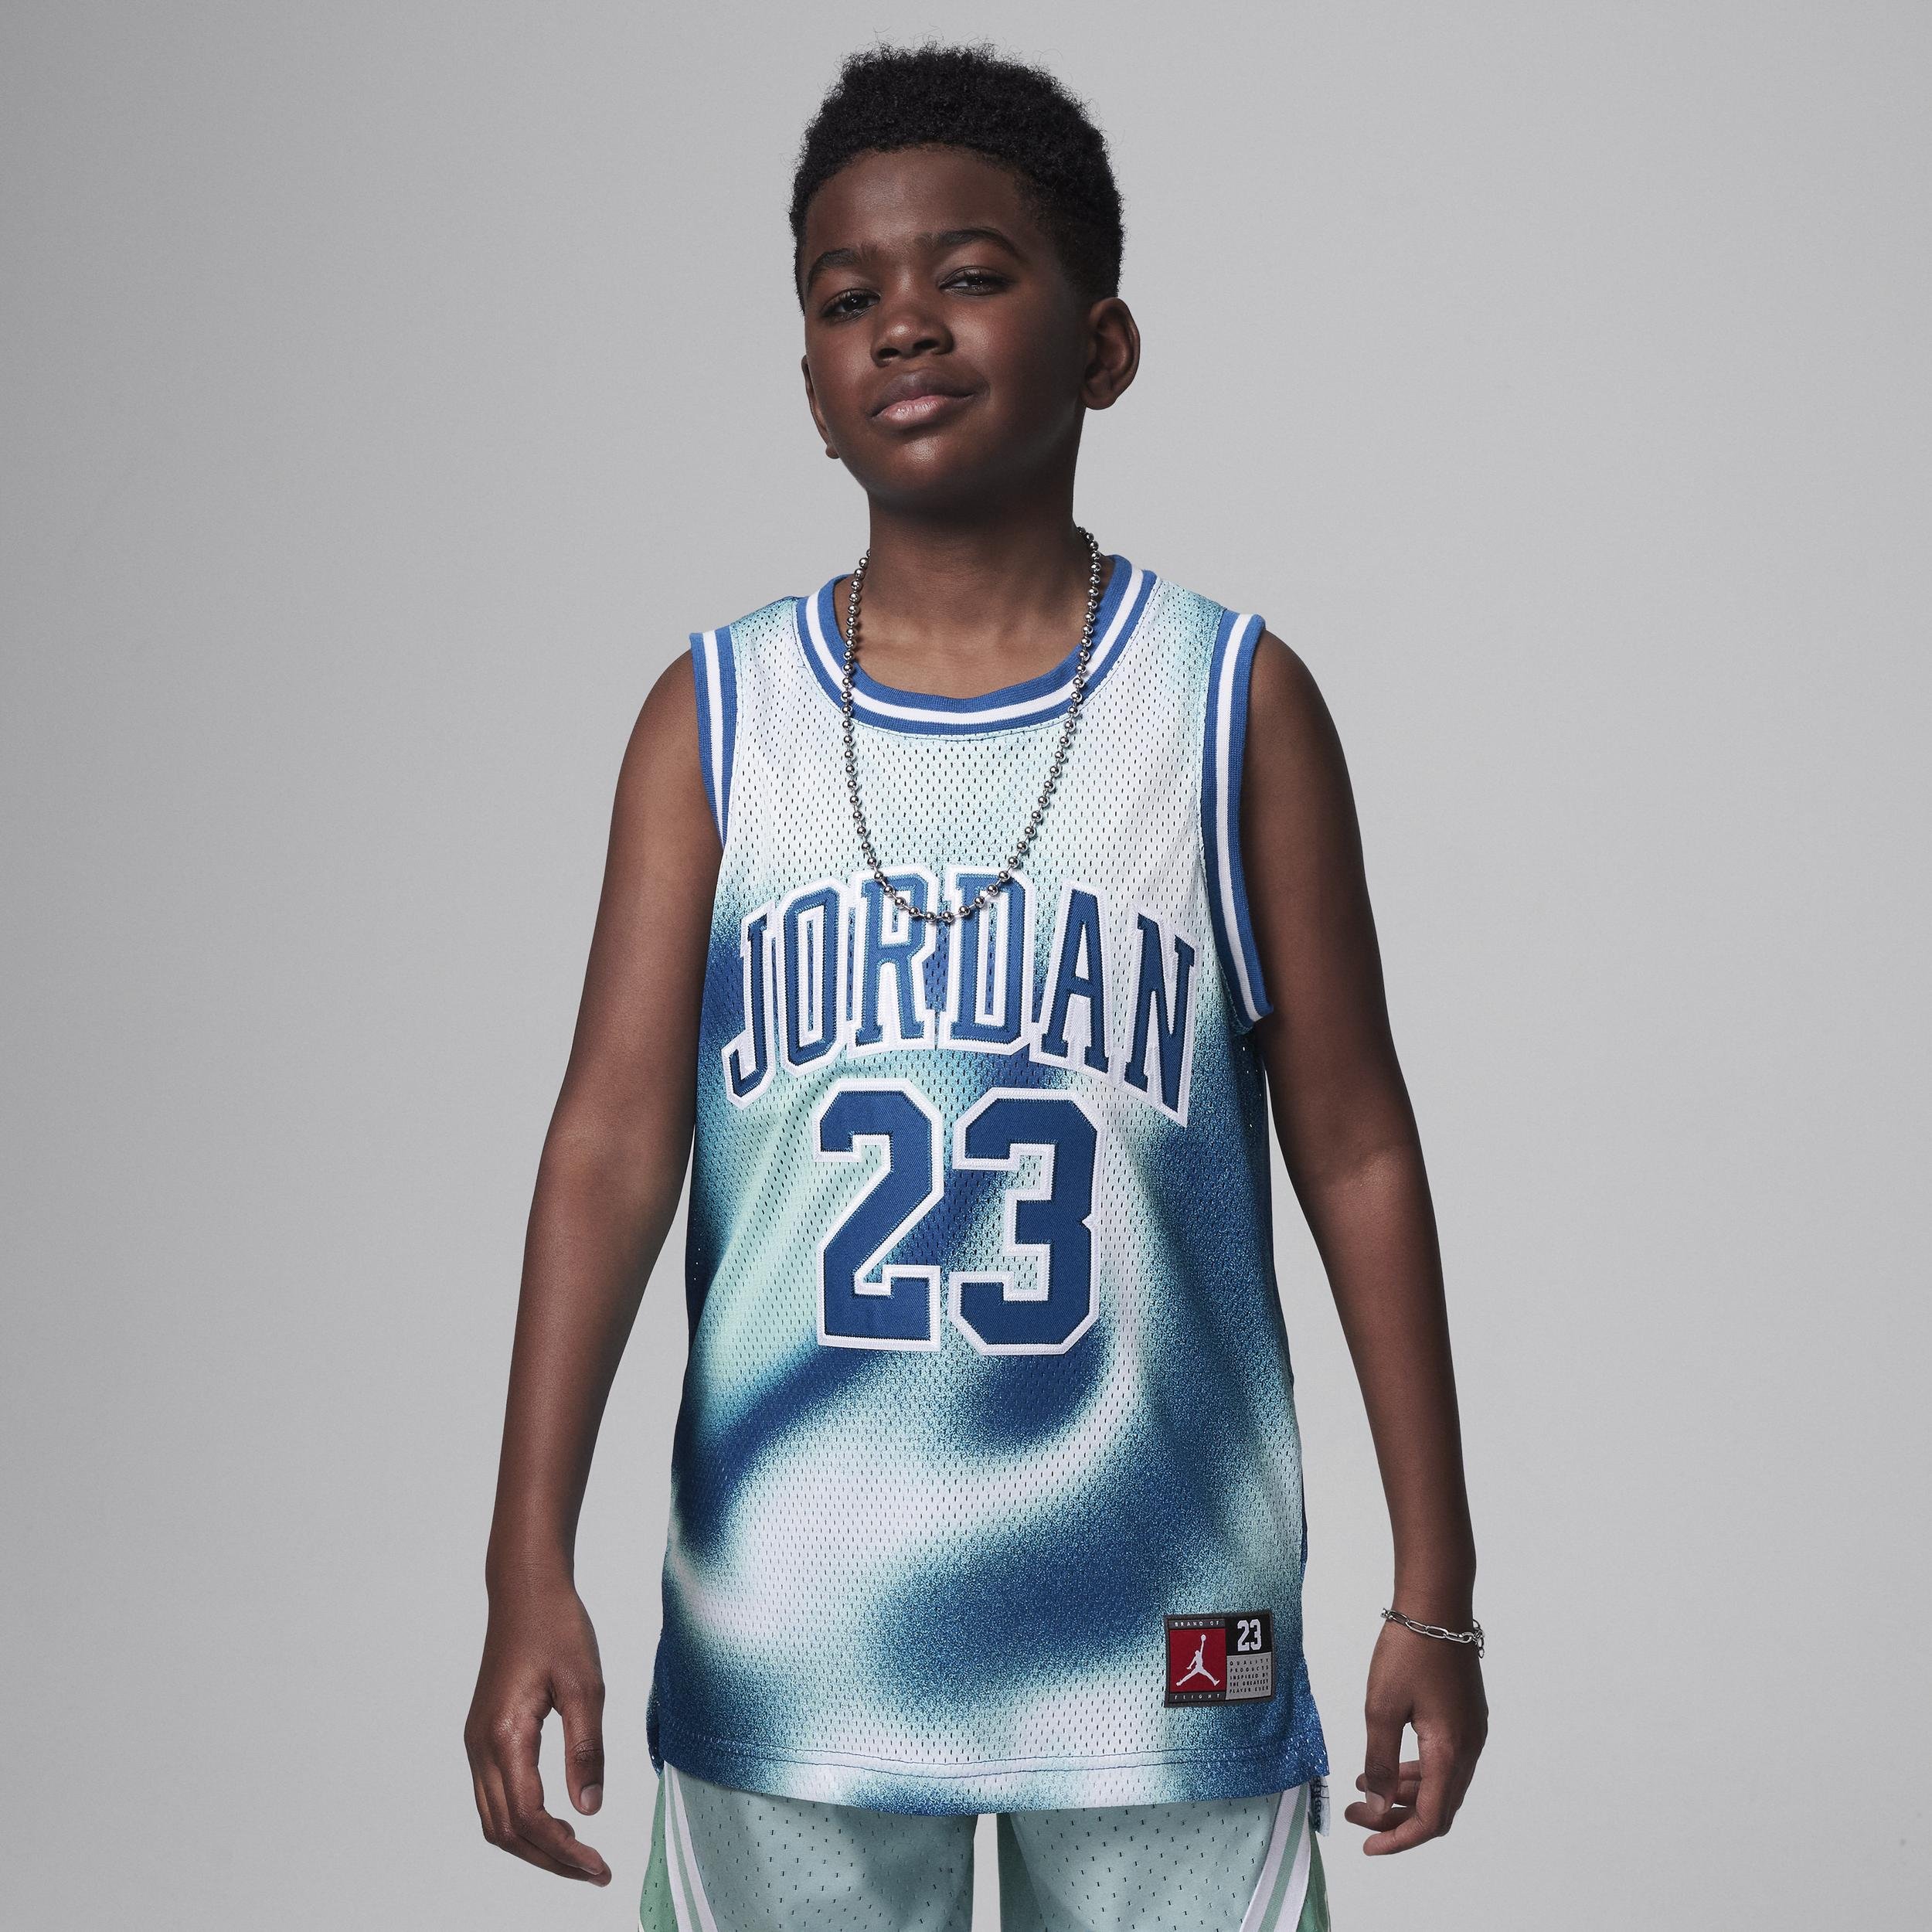 Jordan23 Big Kids' Printed Jersey by JORDAN